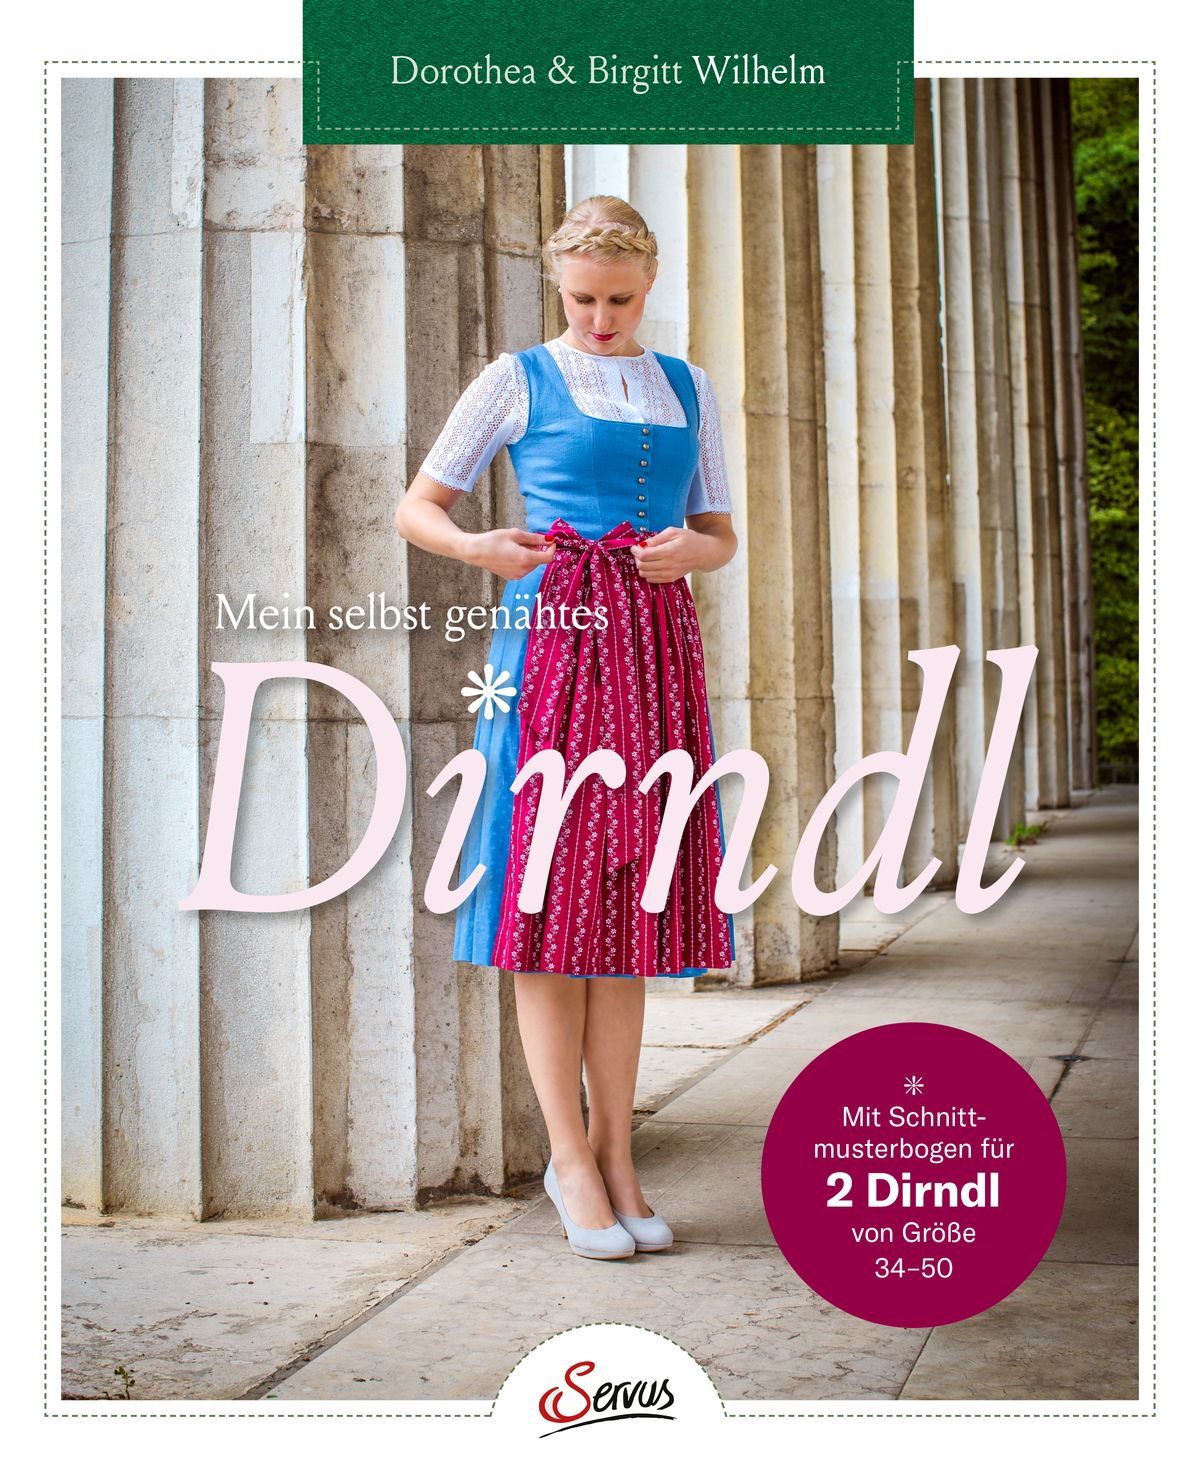 „Mein selbst genähtes Dirndl“, Dorothea & Birgitt Wilhelm Servus, ISBN-13 9783710402197